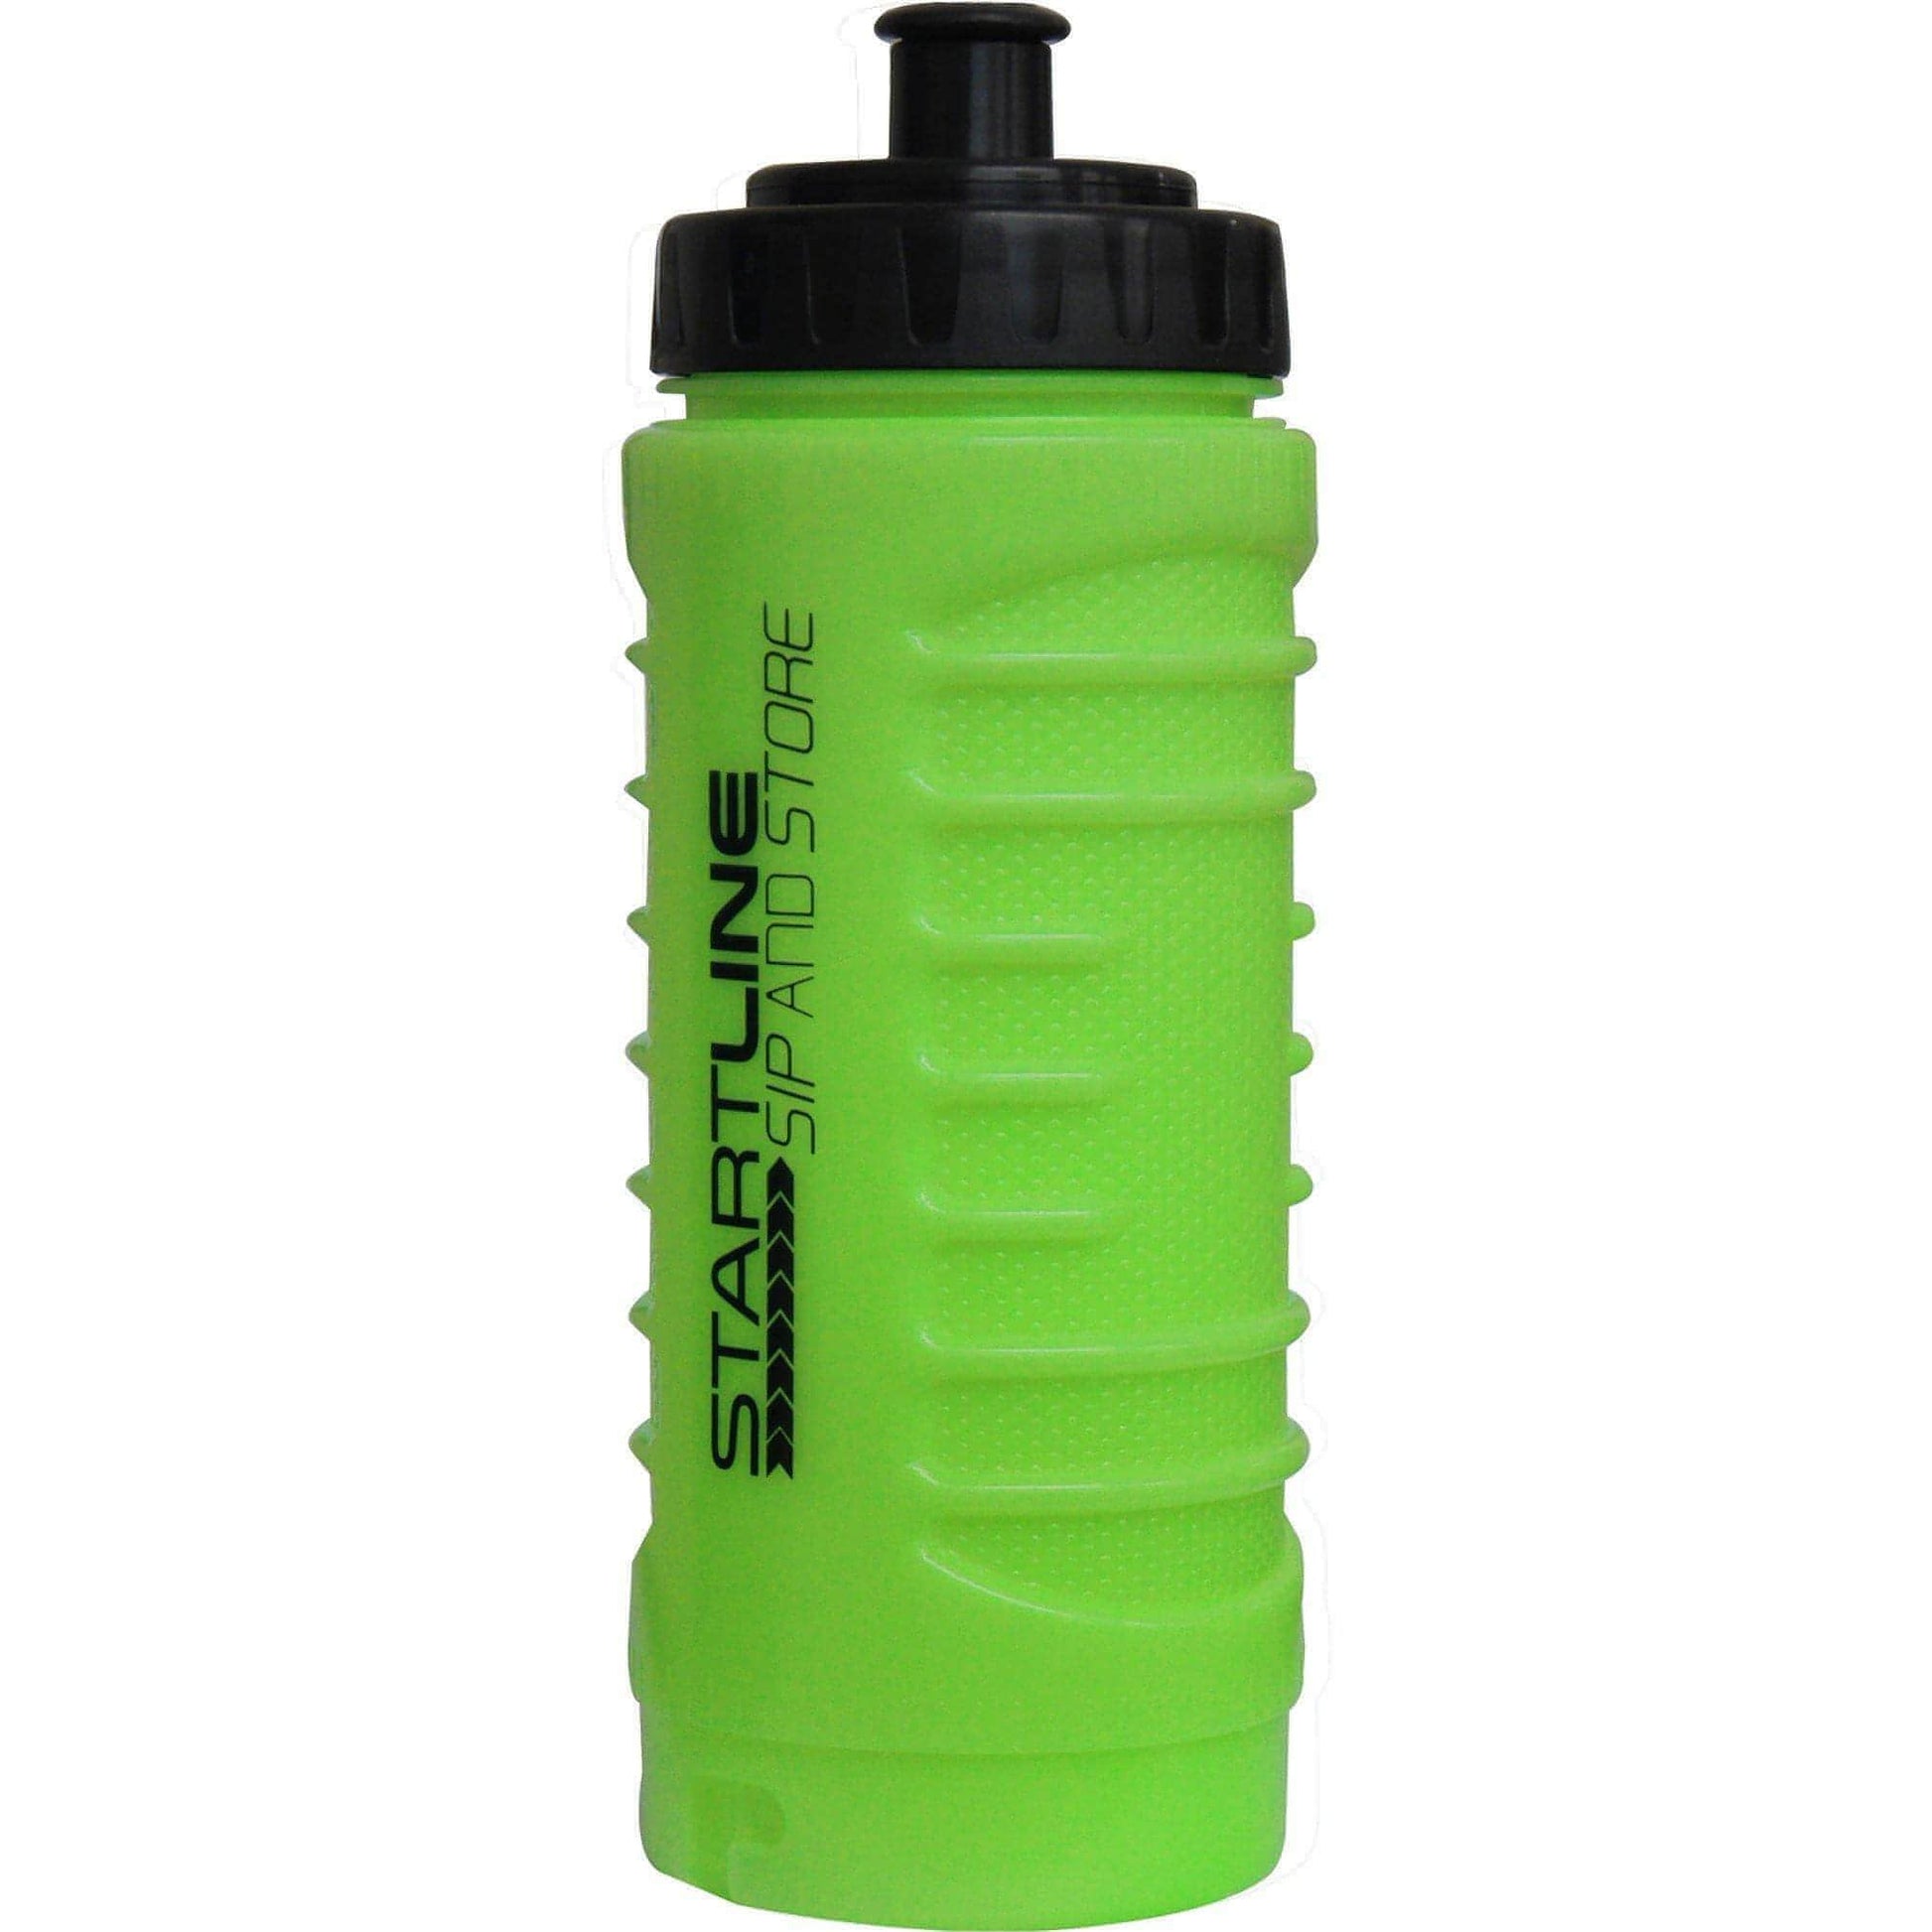 StartLine Sip and Store Sports Water Bottle - Green 5055604345823 - Start Fitness